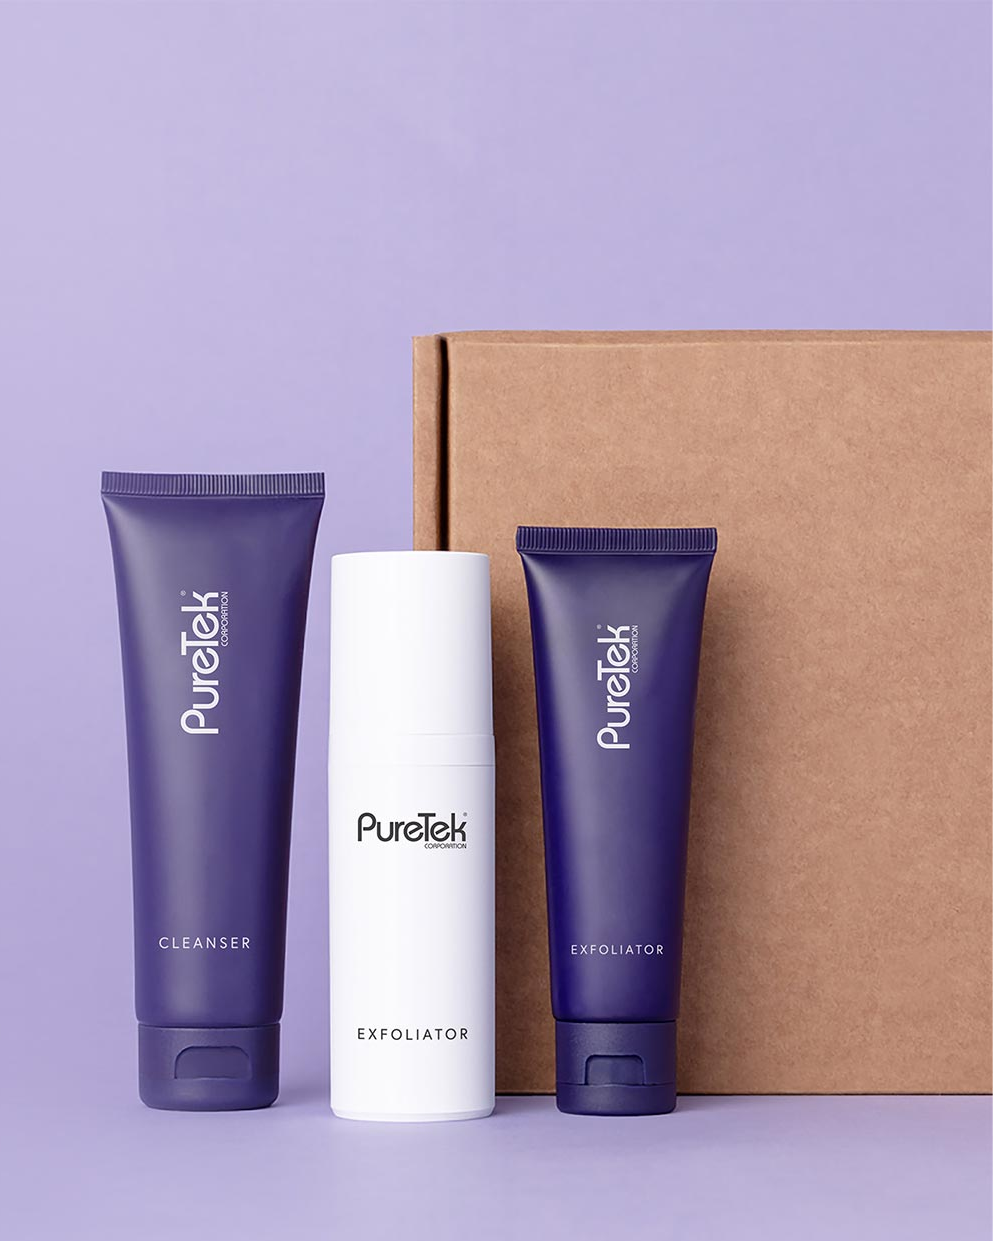 PureTek Face Product Packaging